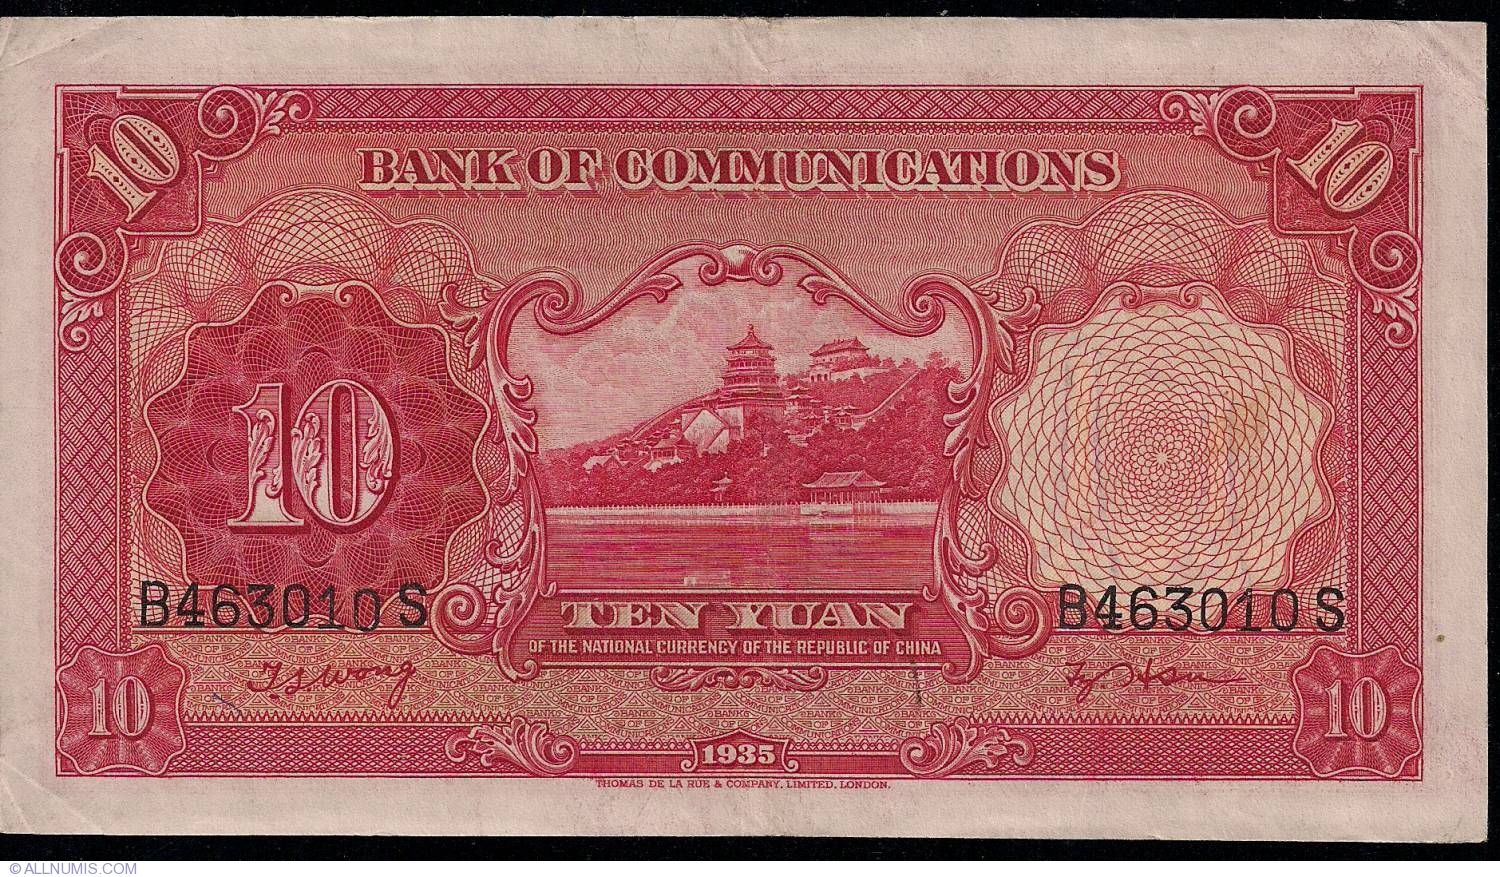 10 Yuan 1935, 1935 Issue - Bank of Communications - China